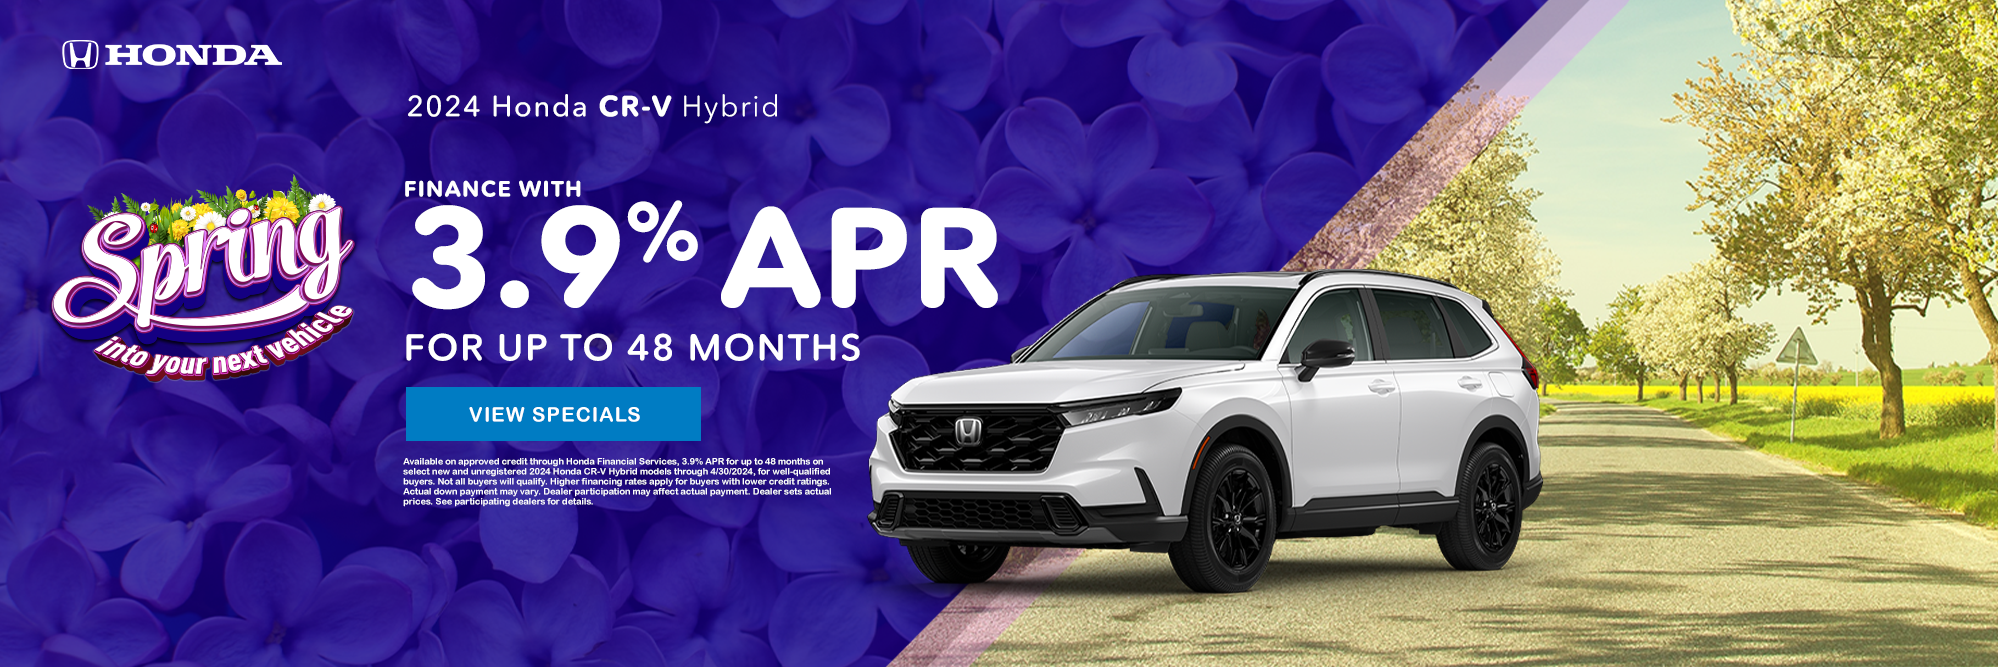 2024 Honda CR-V Hybrid 3.9% APR 